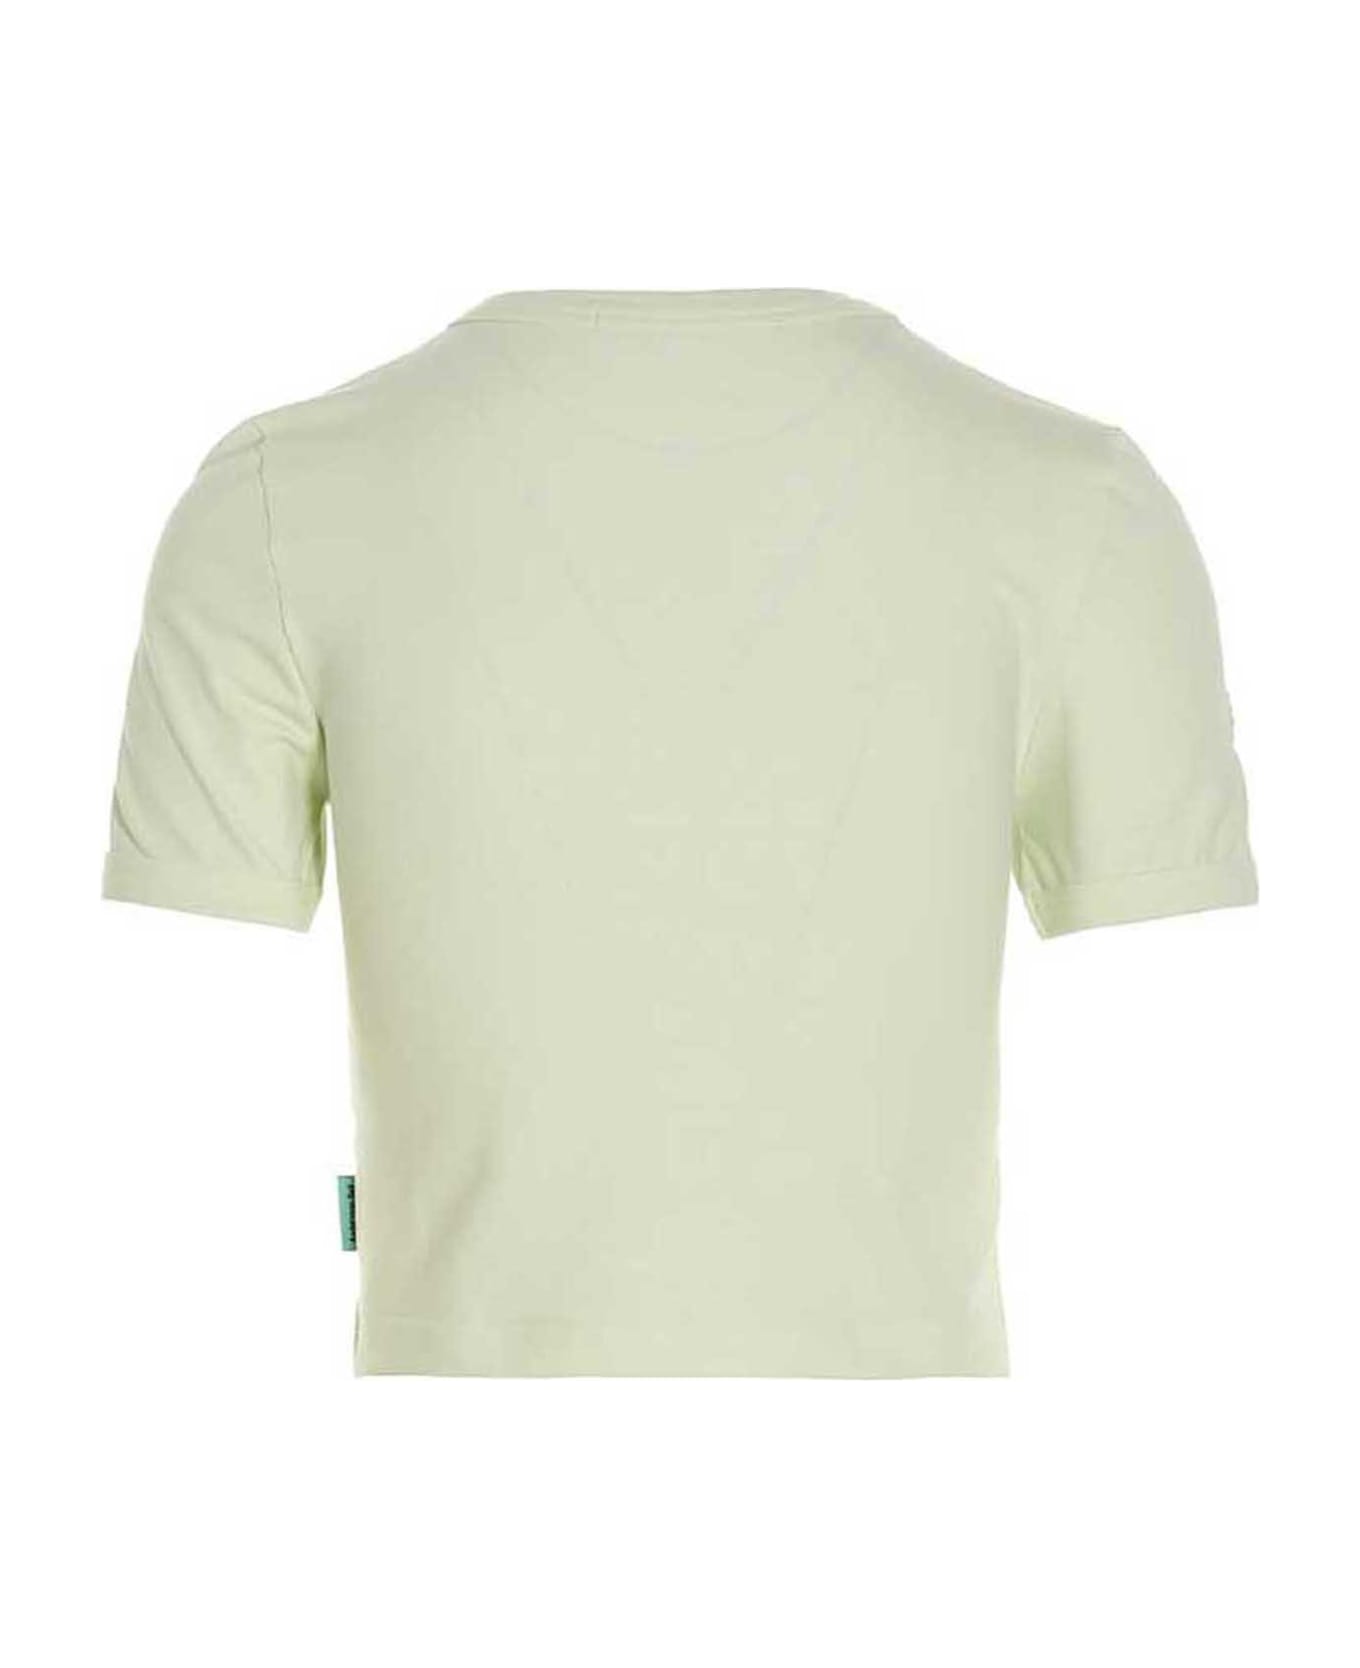 Andersson Bell 'dasha' T-shirt - Green